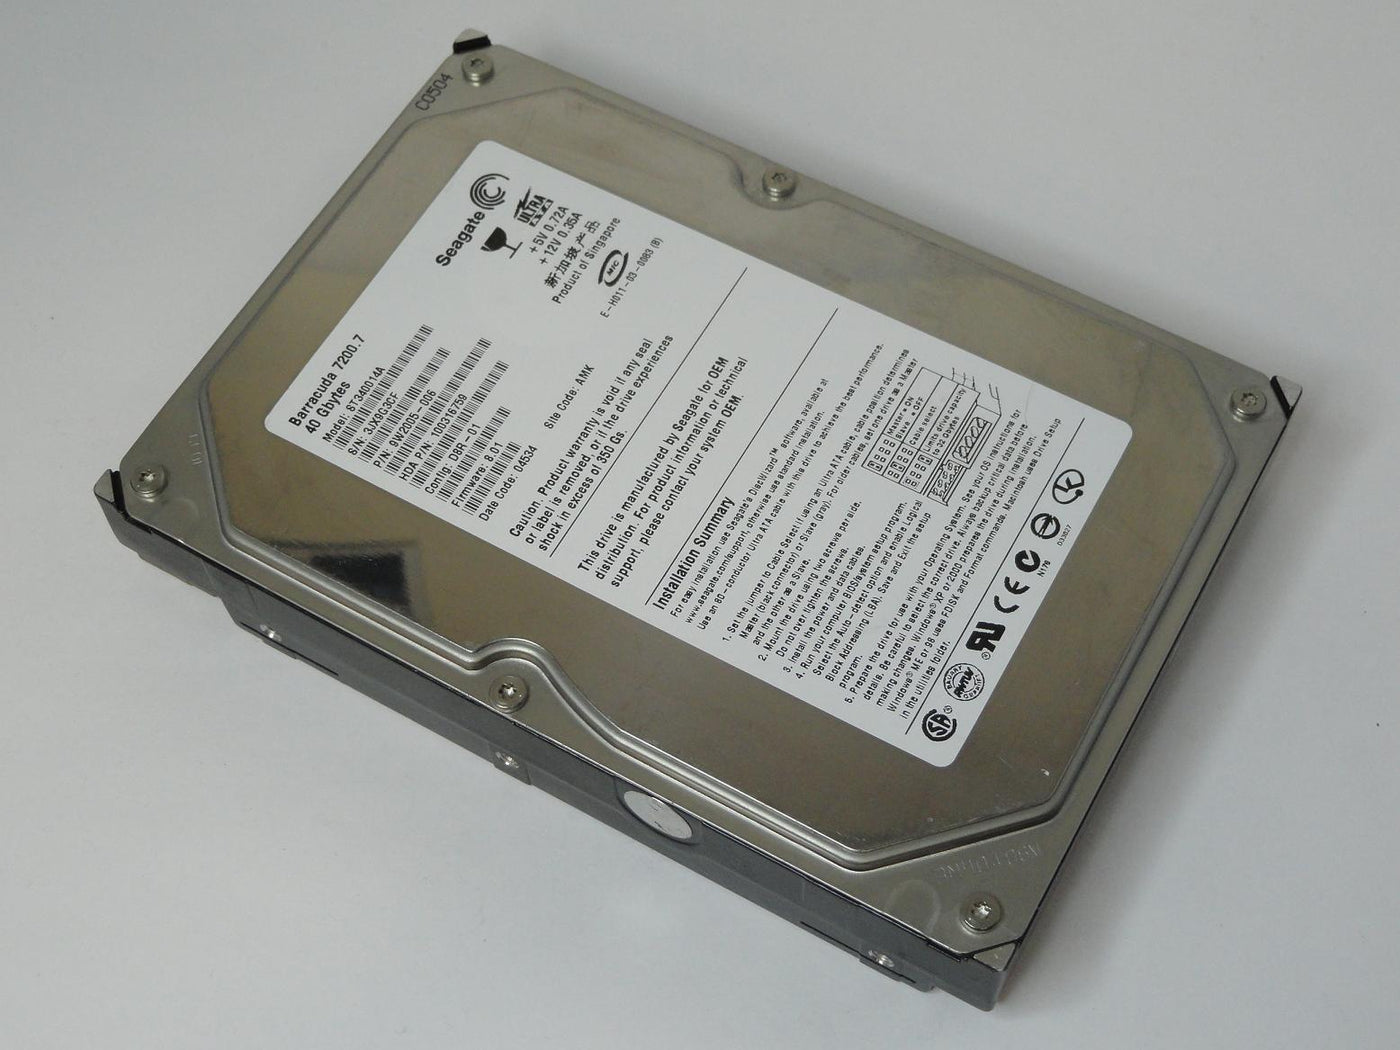 9W2005-006 - Seagate 40GB IDE 7200rpm 3.5in Barracuda 7200.7 HDD - Refurbished